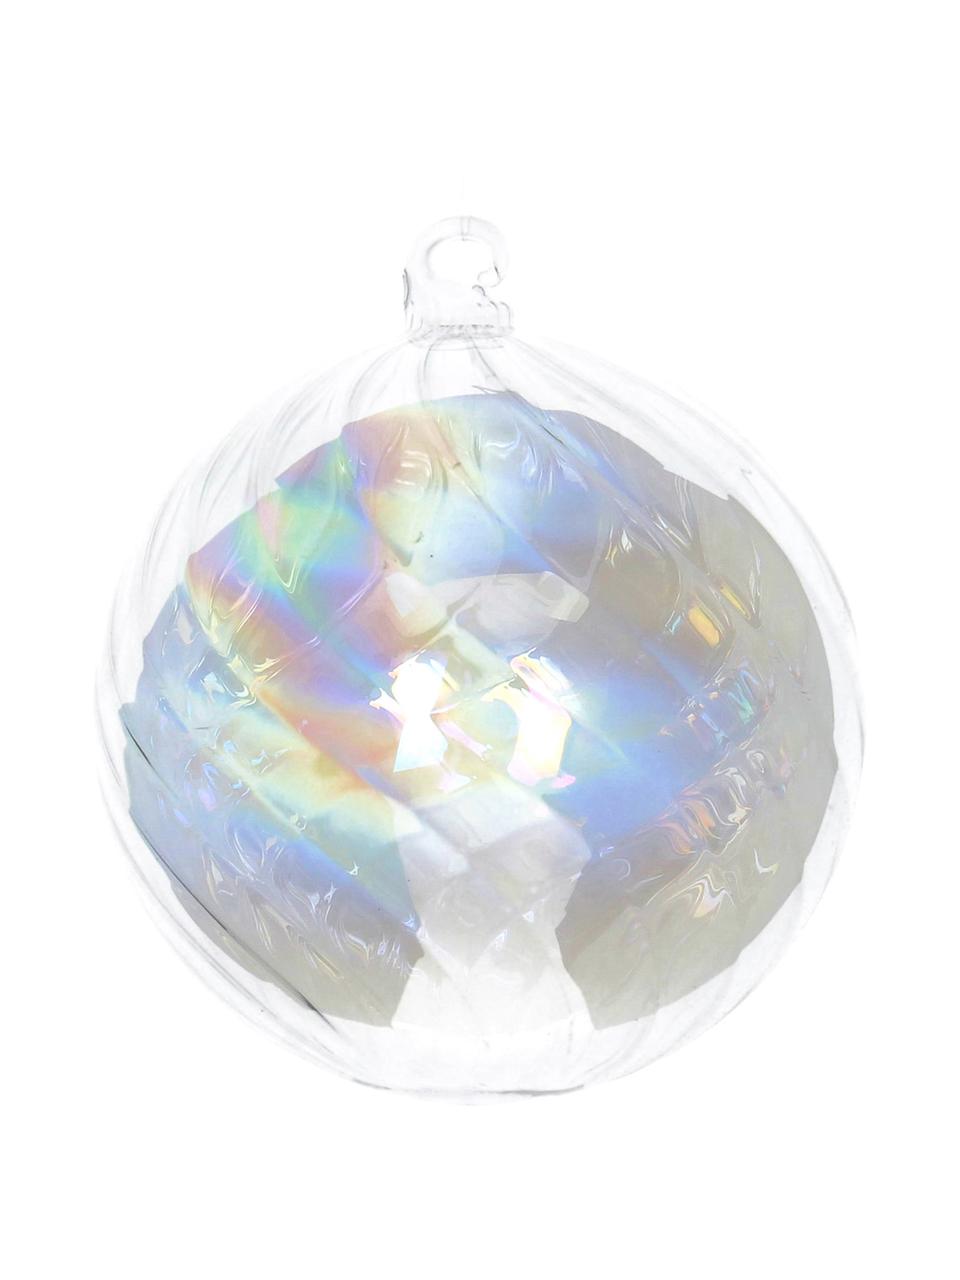 Pallina di Natale Iridescent 2 pz, Trasparente, iridescente, Ø 8 cm